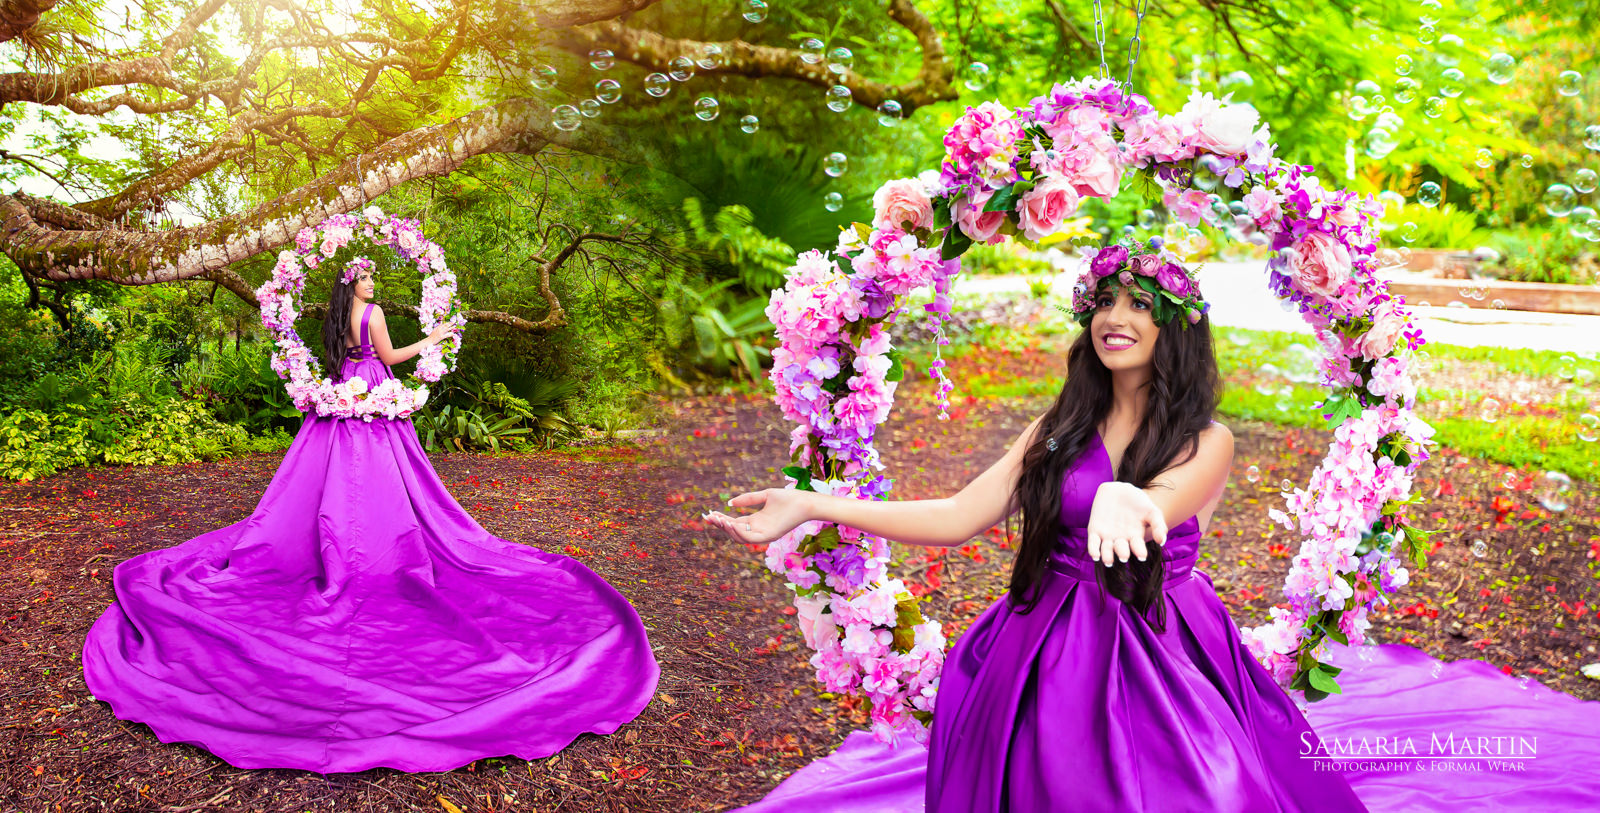 Quinceanera with purple dress, quinceanera with flowers, photos quince, best photoshoot quinceanera, exclusivos vestidos de quince, Samaria Martin photography